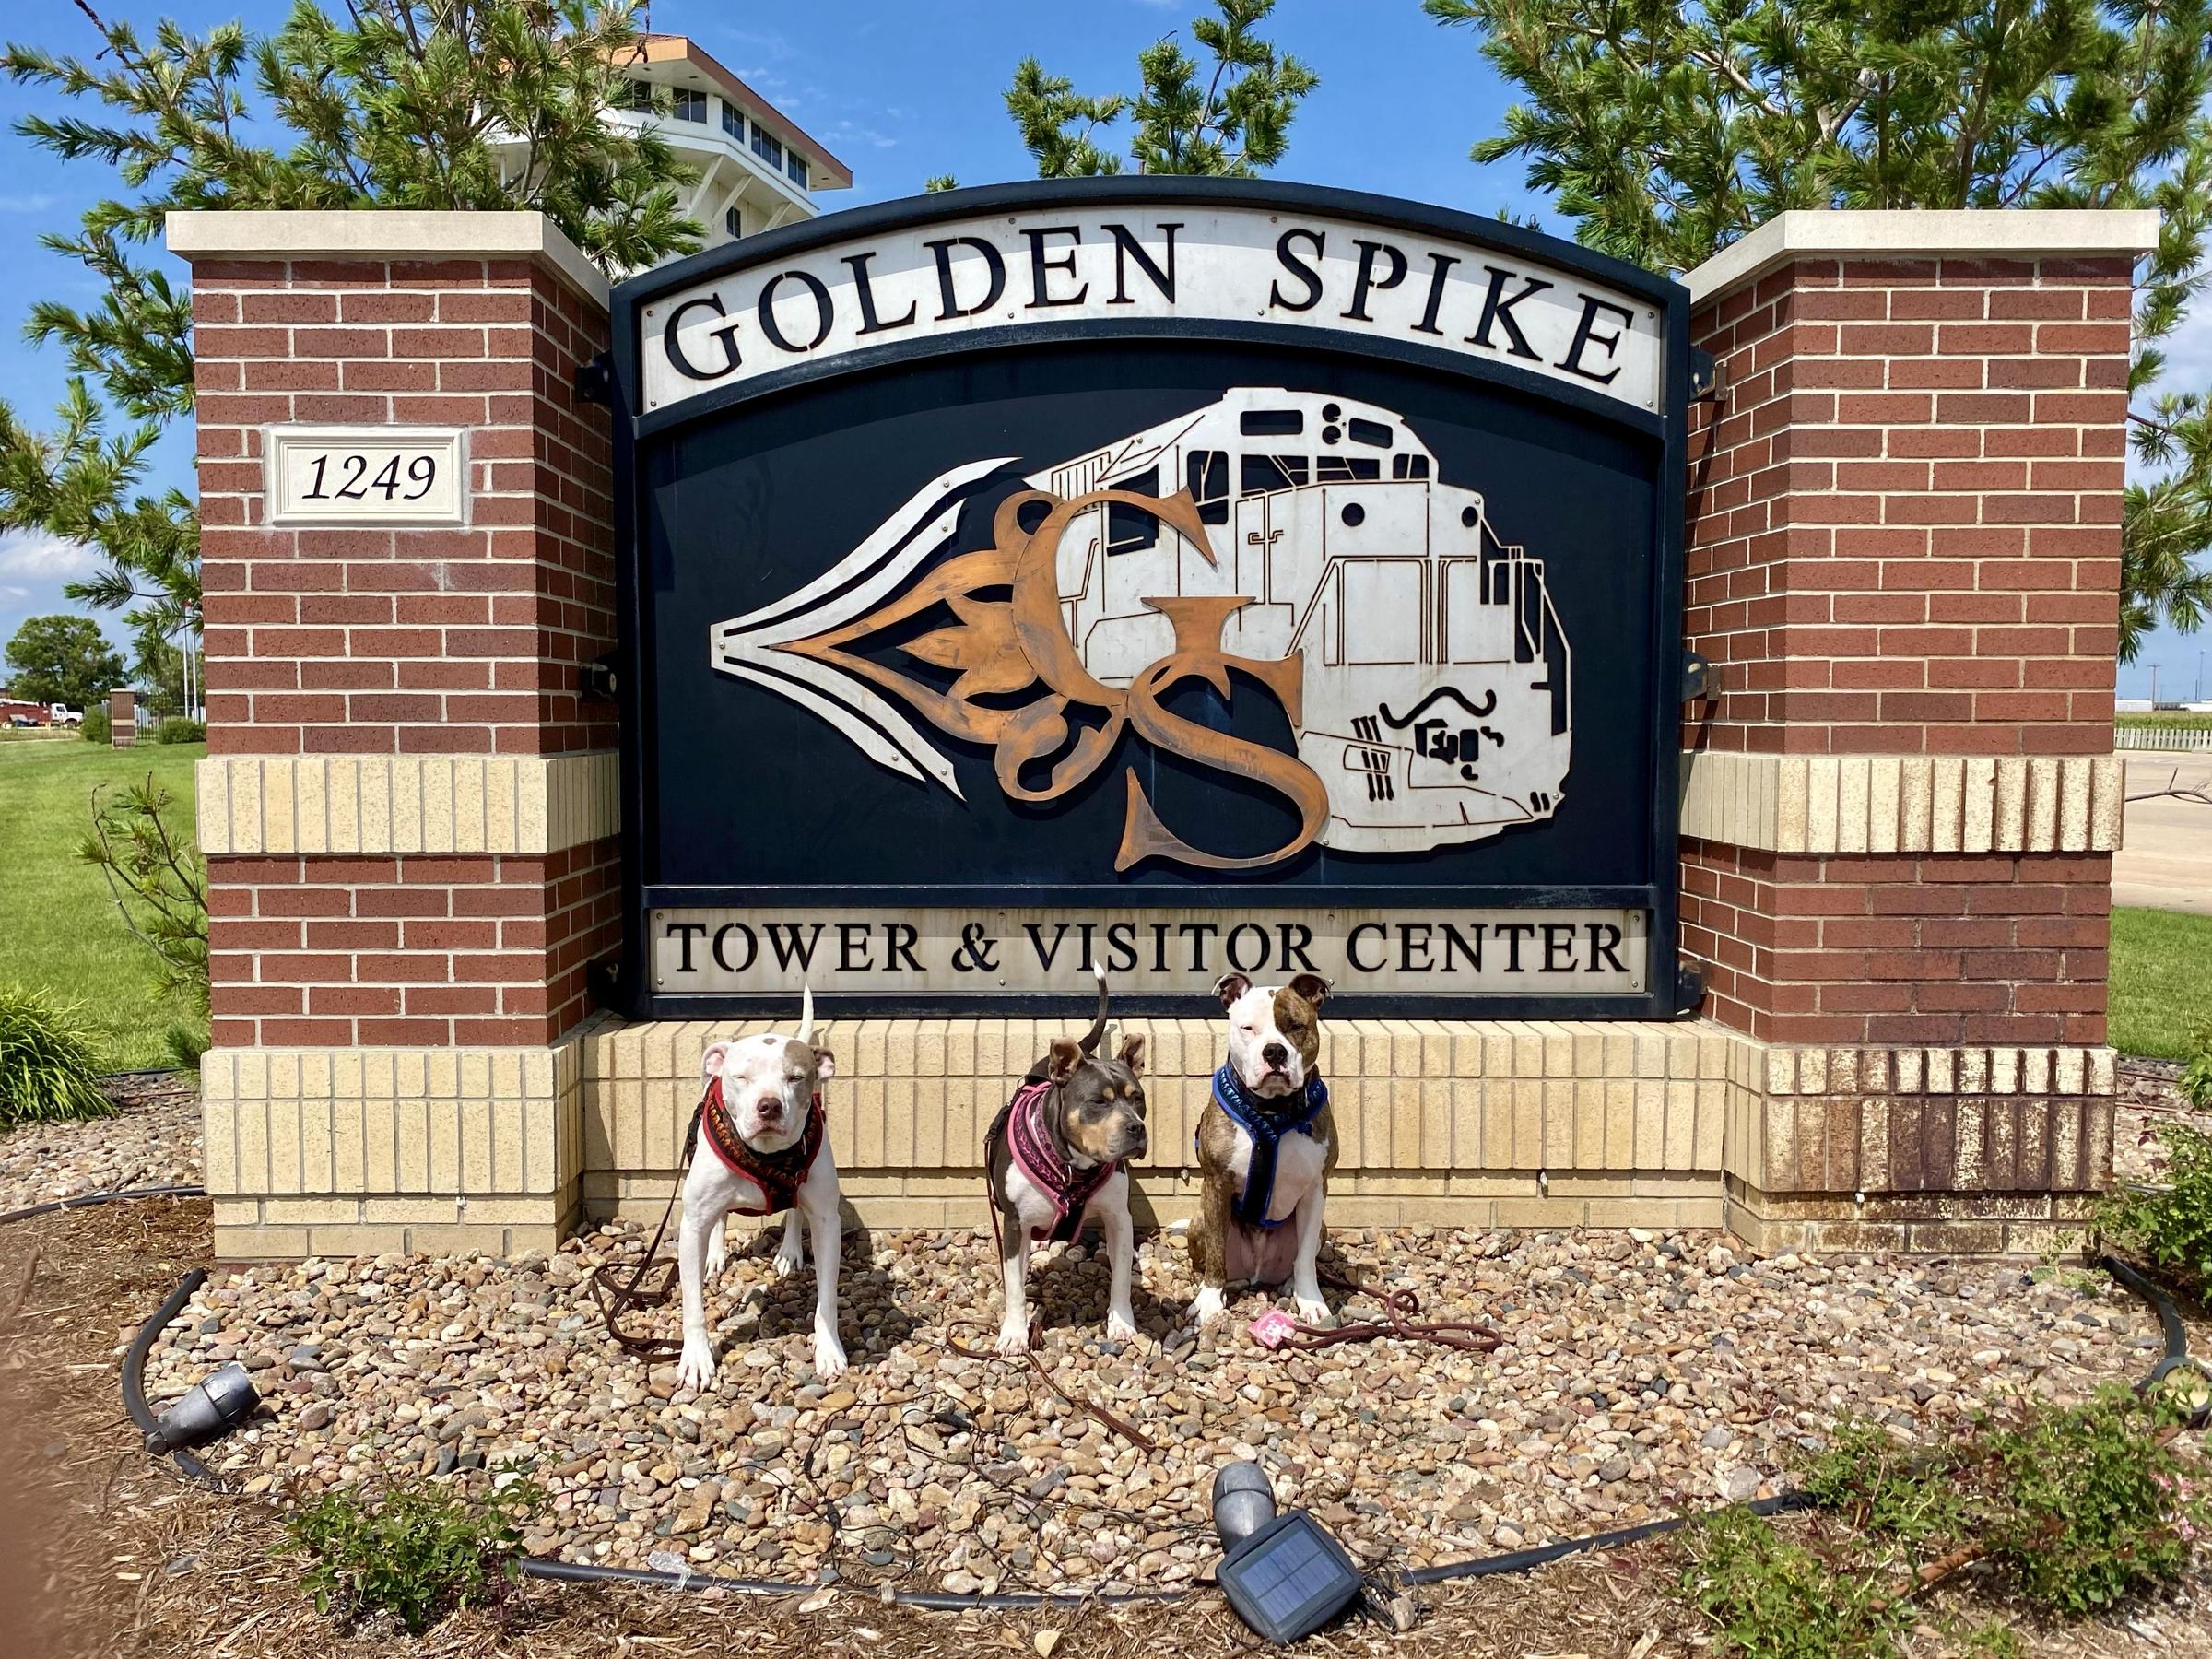 Pet Friendly Golden Spike Tower & Visitor Center